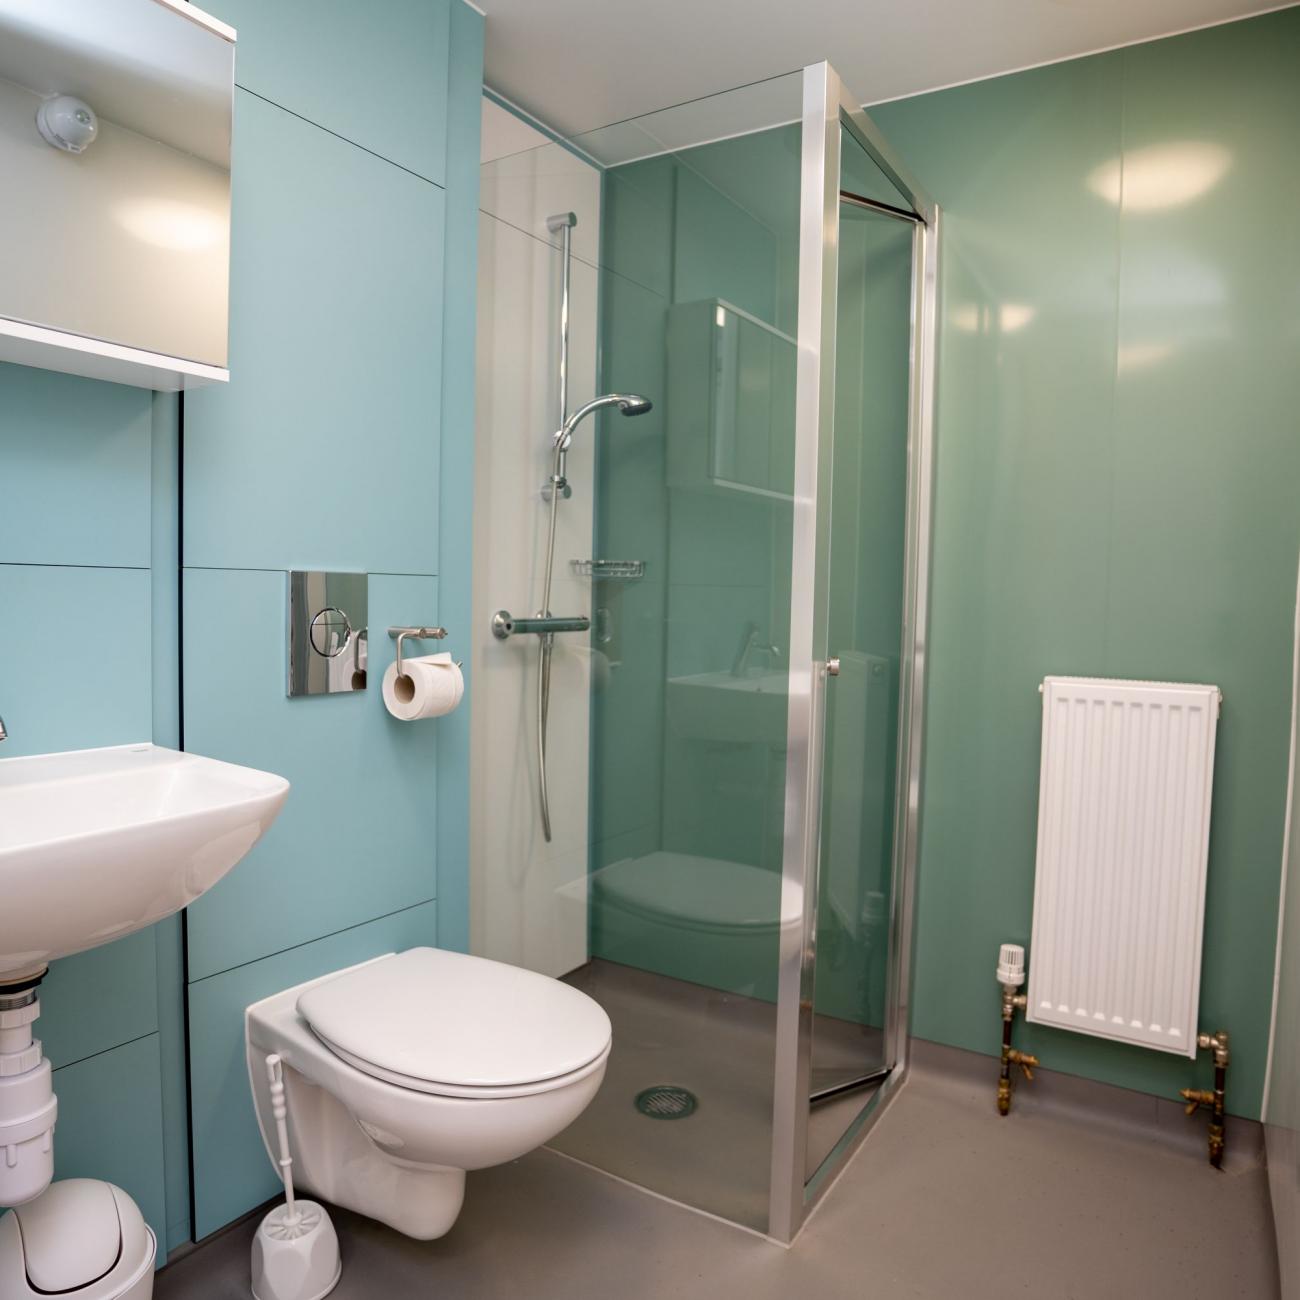 Student accommodation, shared bathroom facilities.